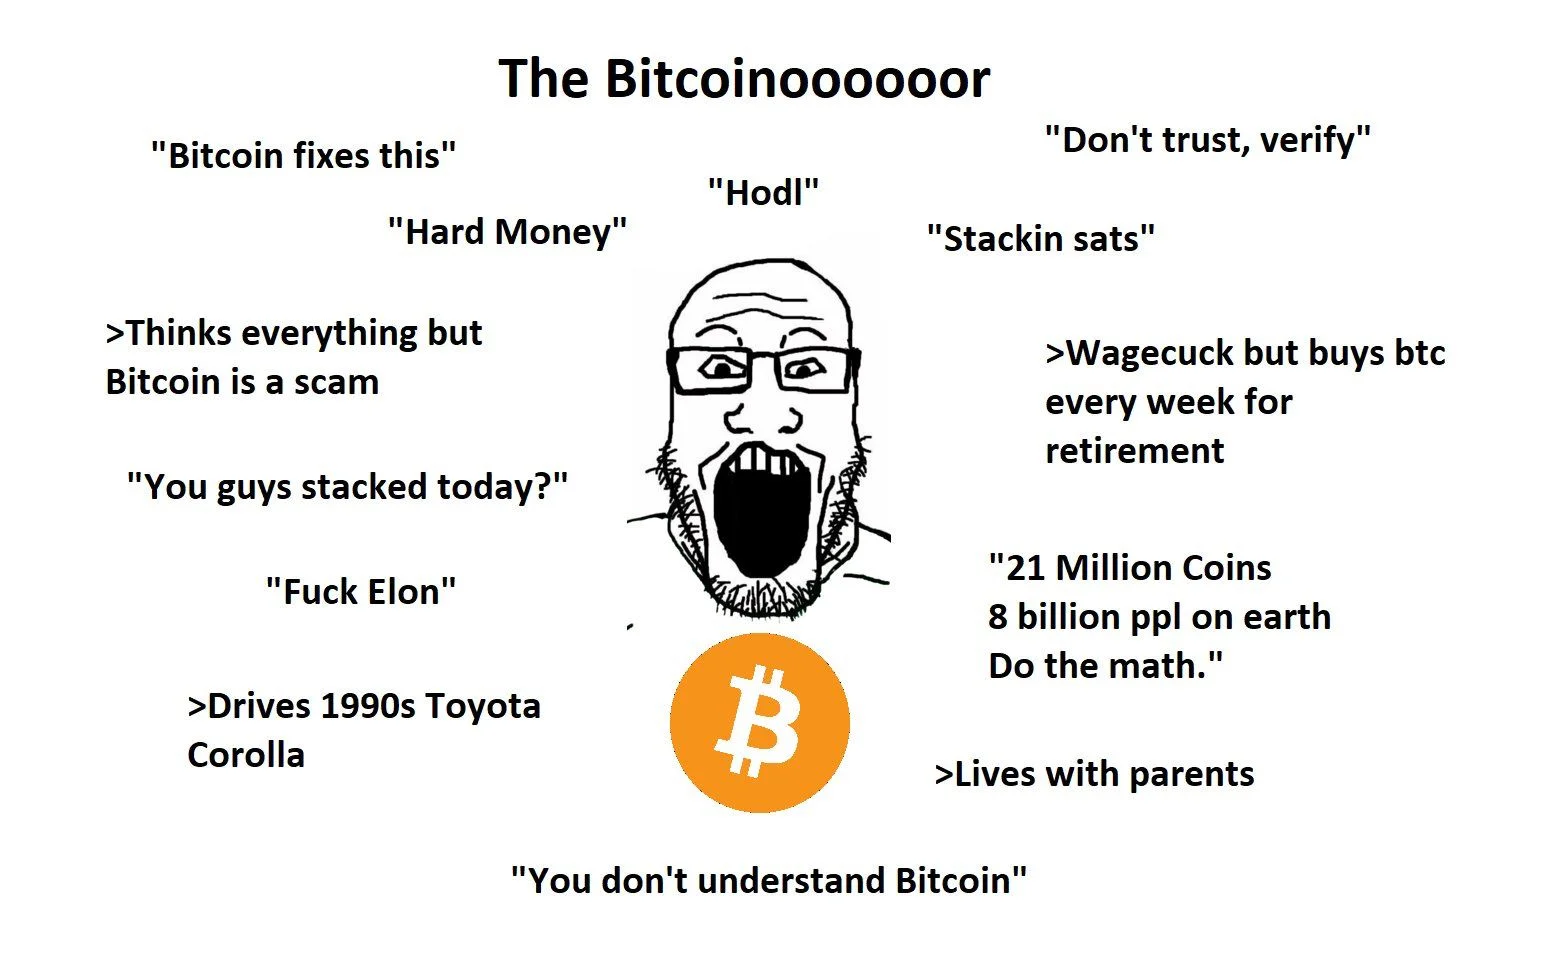 the Bitcoinooooor meme